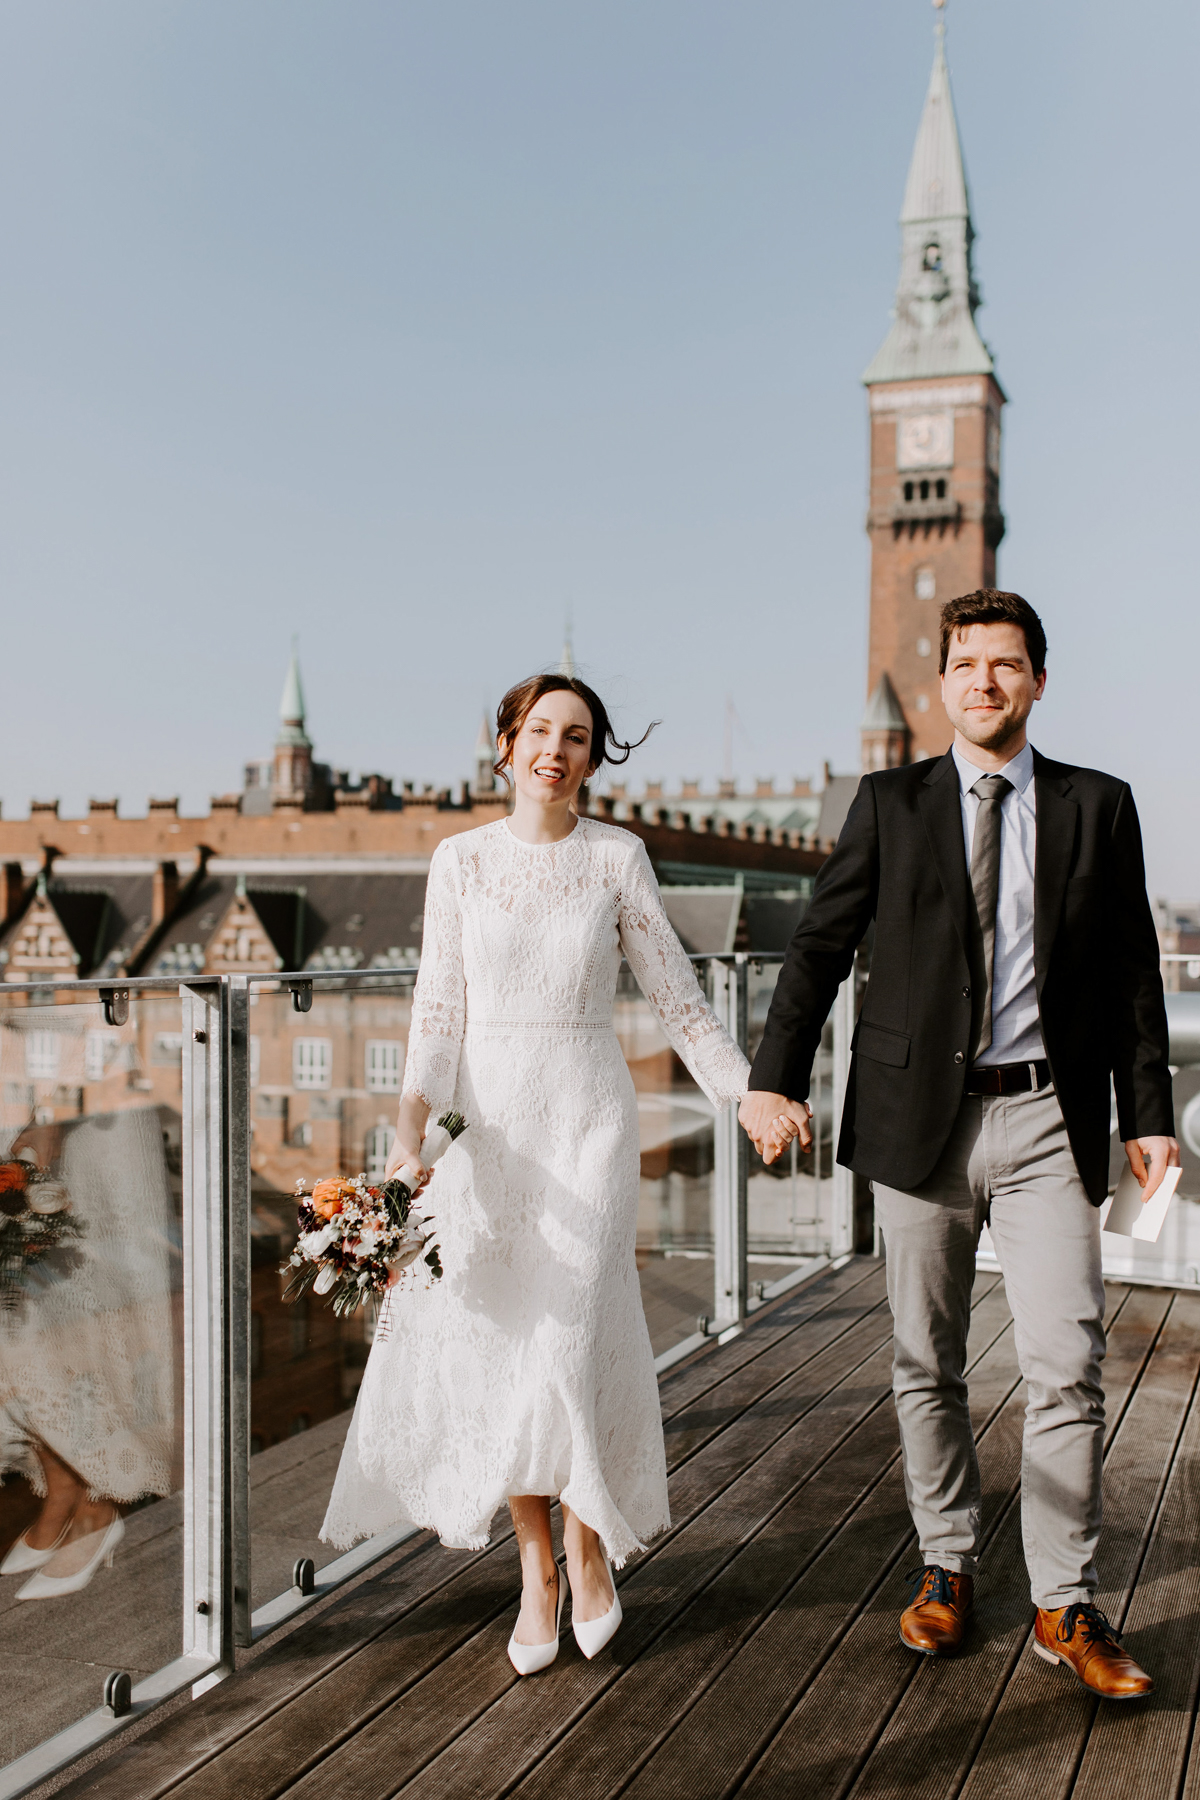 Our Dreamy Copenhagen Elopement ~ City Hall Wedding Photographer, Elva Ziemele / Lace Ivy and Oak Wedding Dress, Denmark, Hotel Danmark / RG Daily Blog, Rebecca Goddard